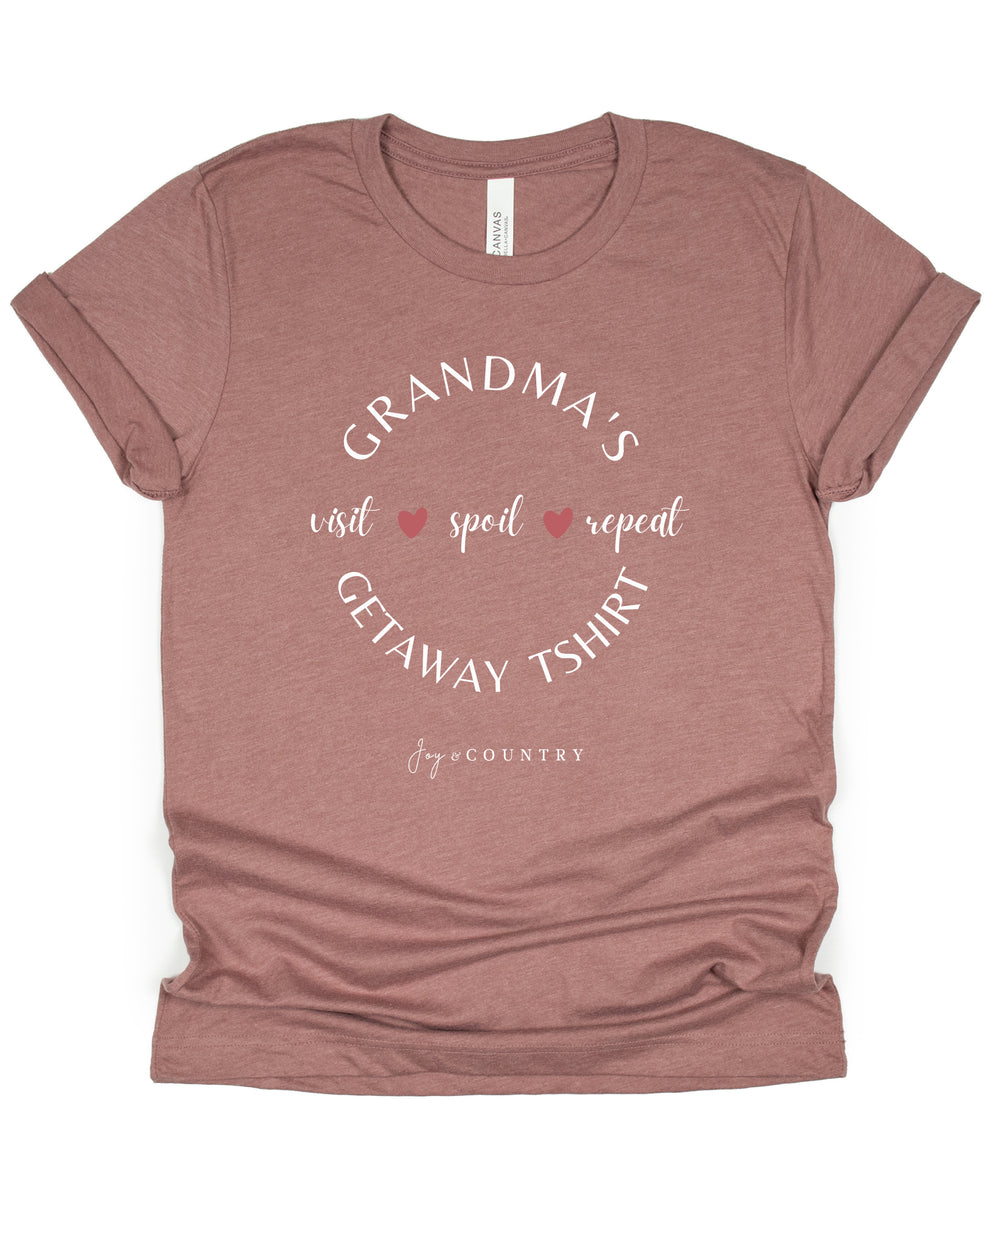 Grandma's Getaway Tshirt - Unisex Crew-Neck Tee - Joy & Country